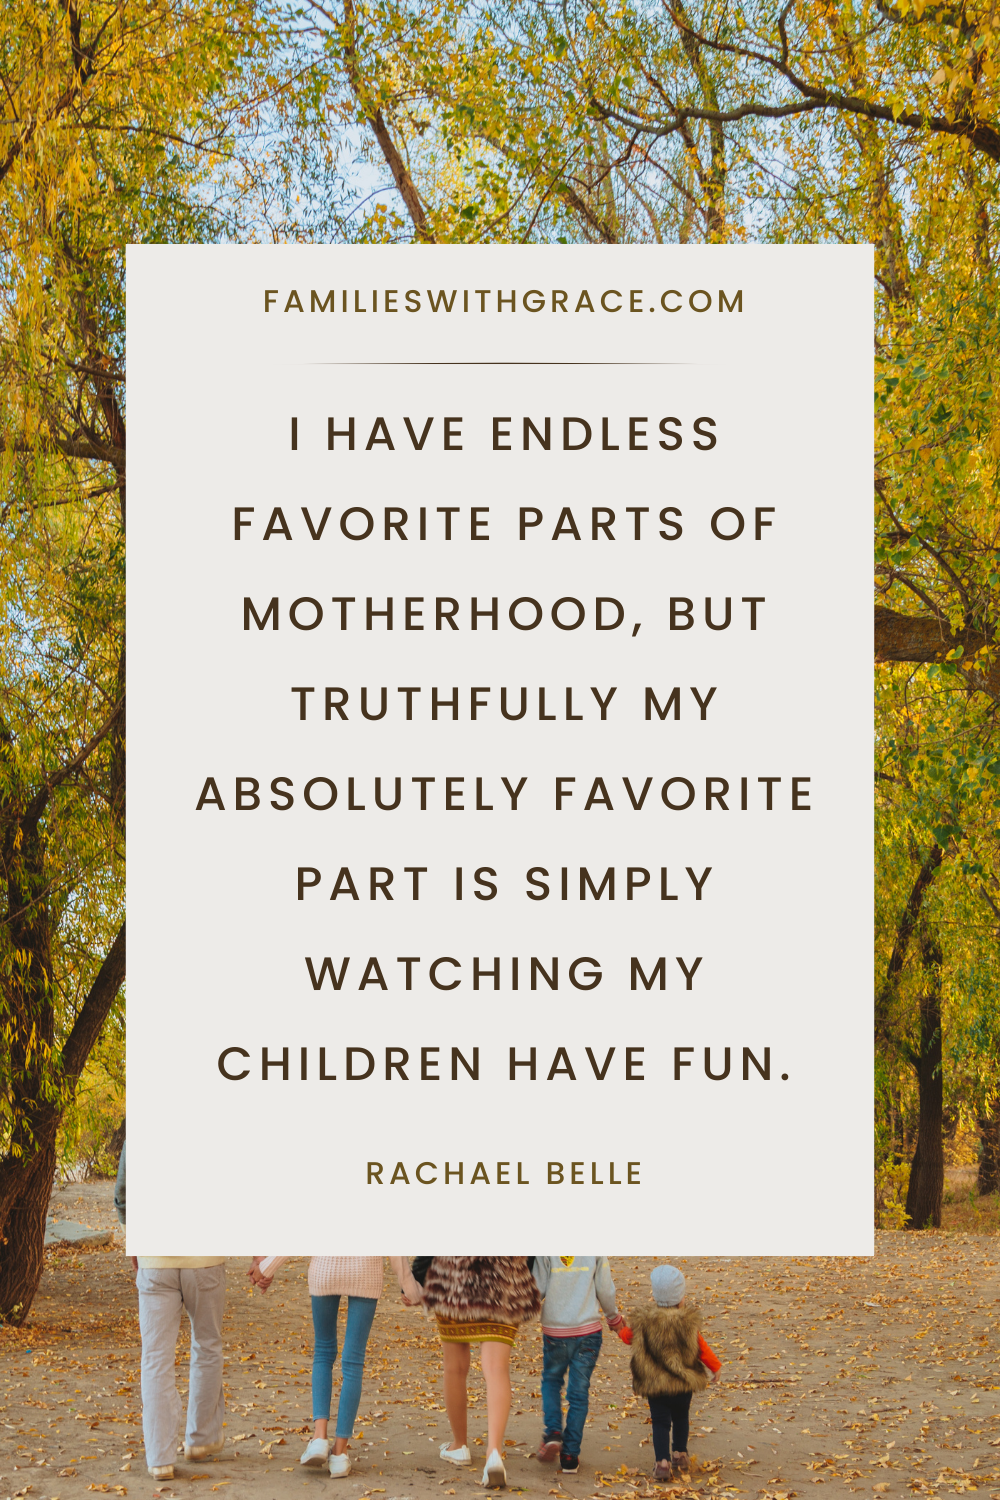 Moms with Grace: Rachael Belle